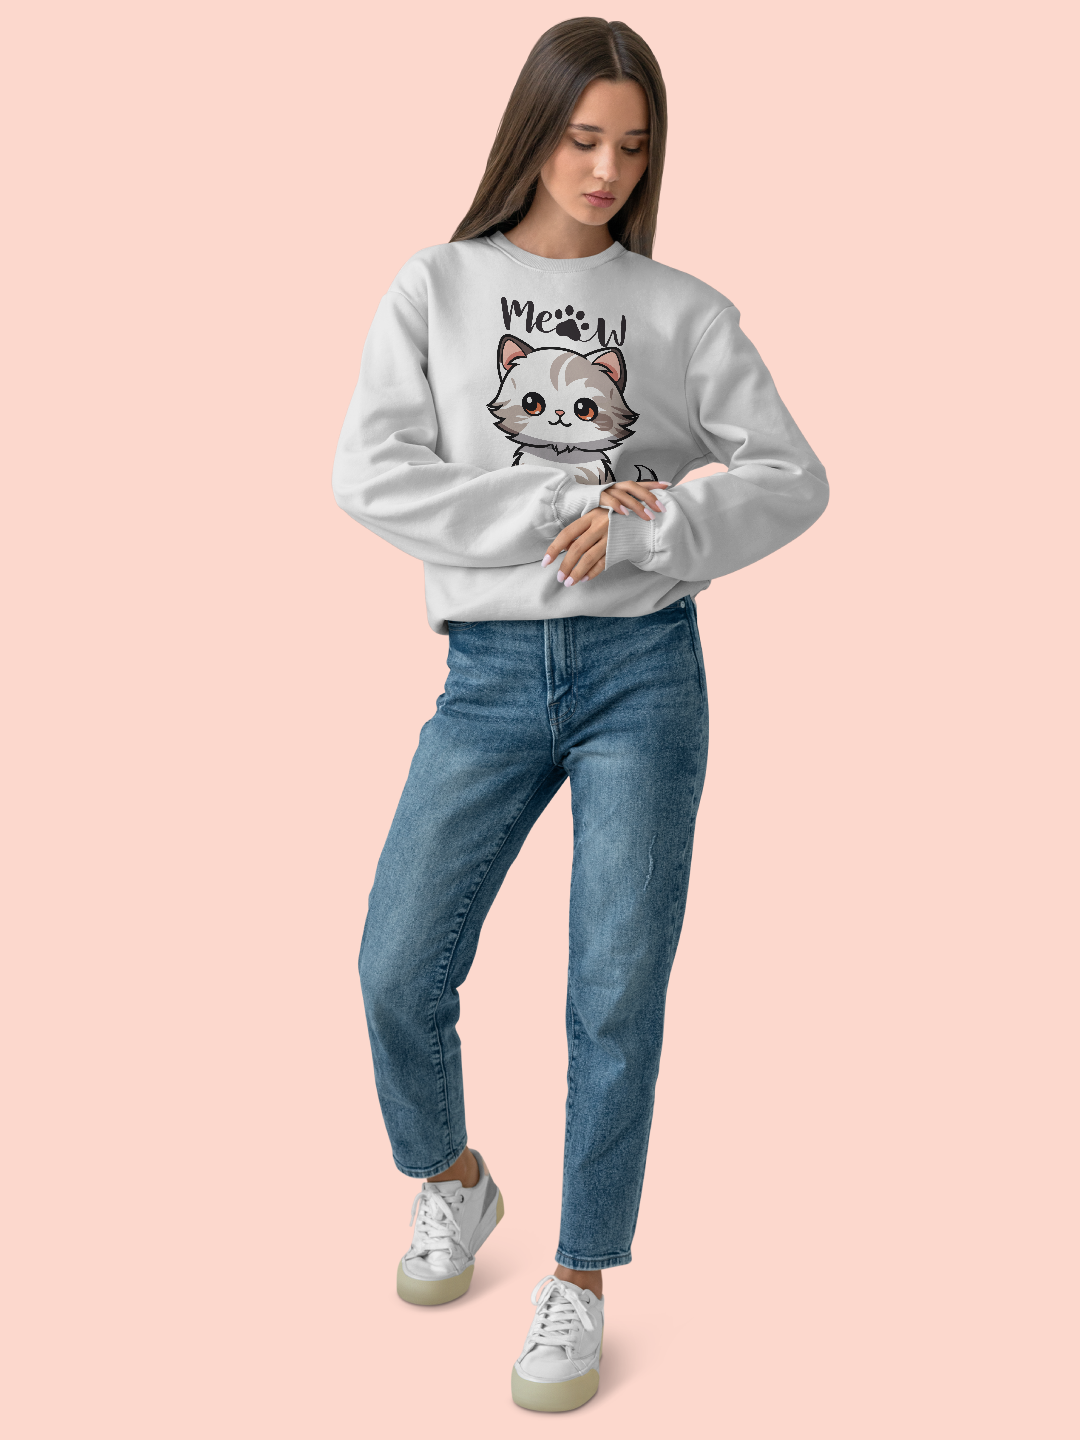 Women's Oversized Sweatshirt with Cat Design – White Color Option